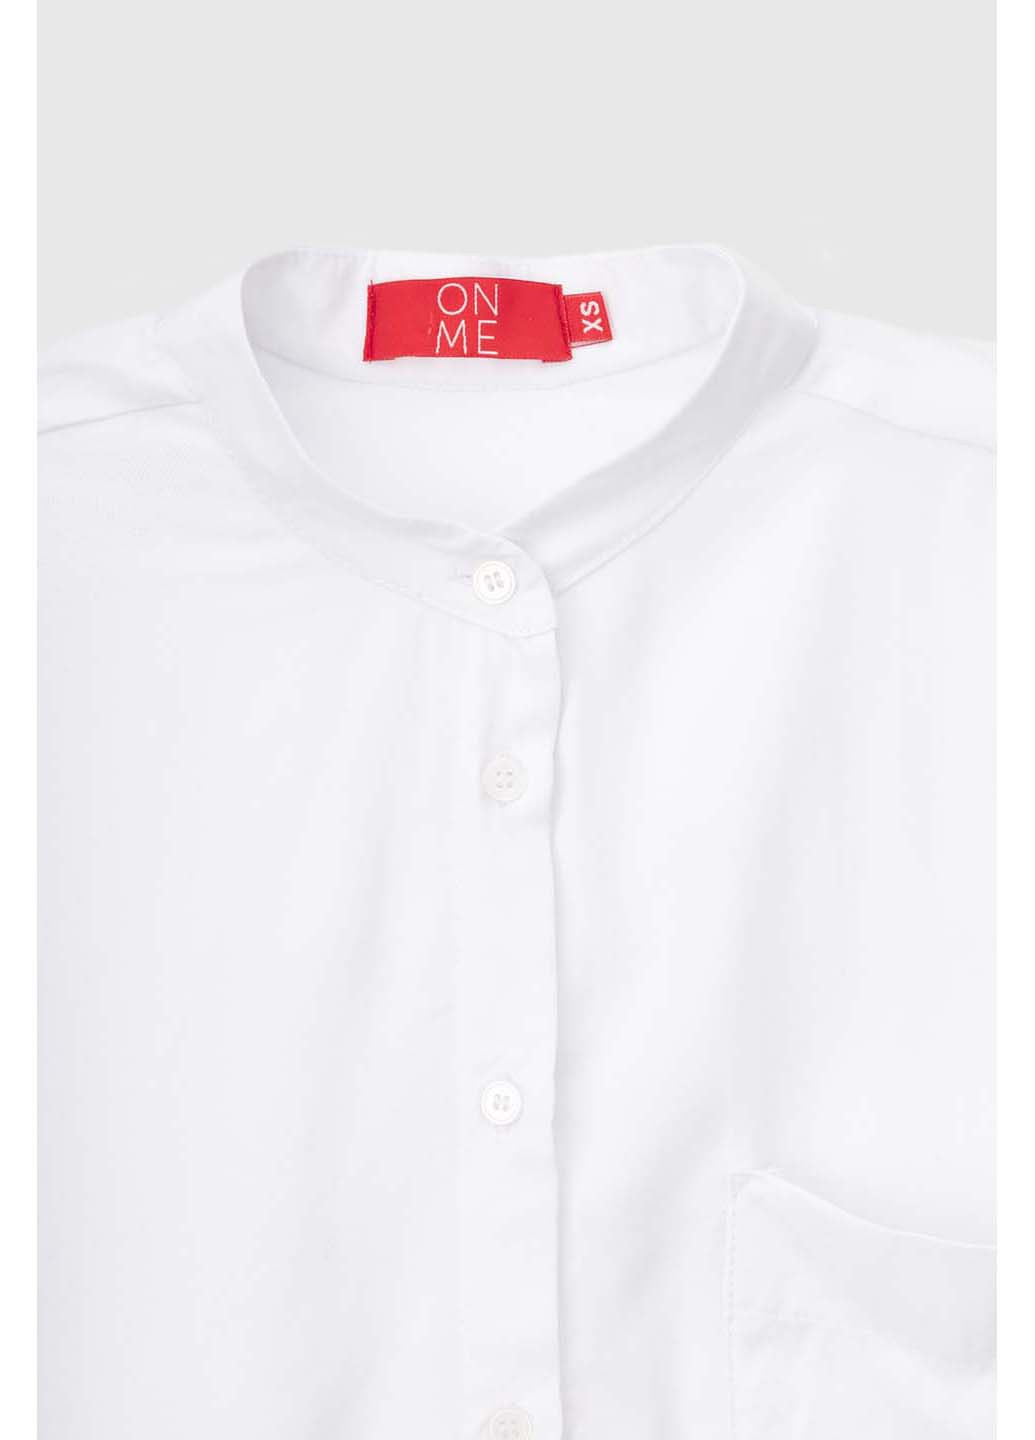 Біла демісезонна блузка Onme